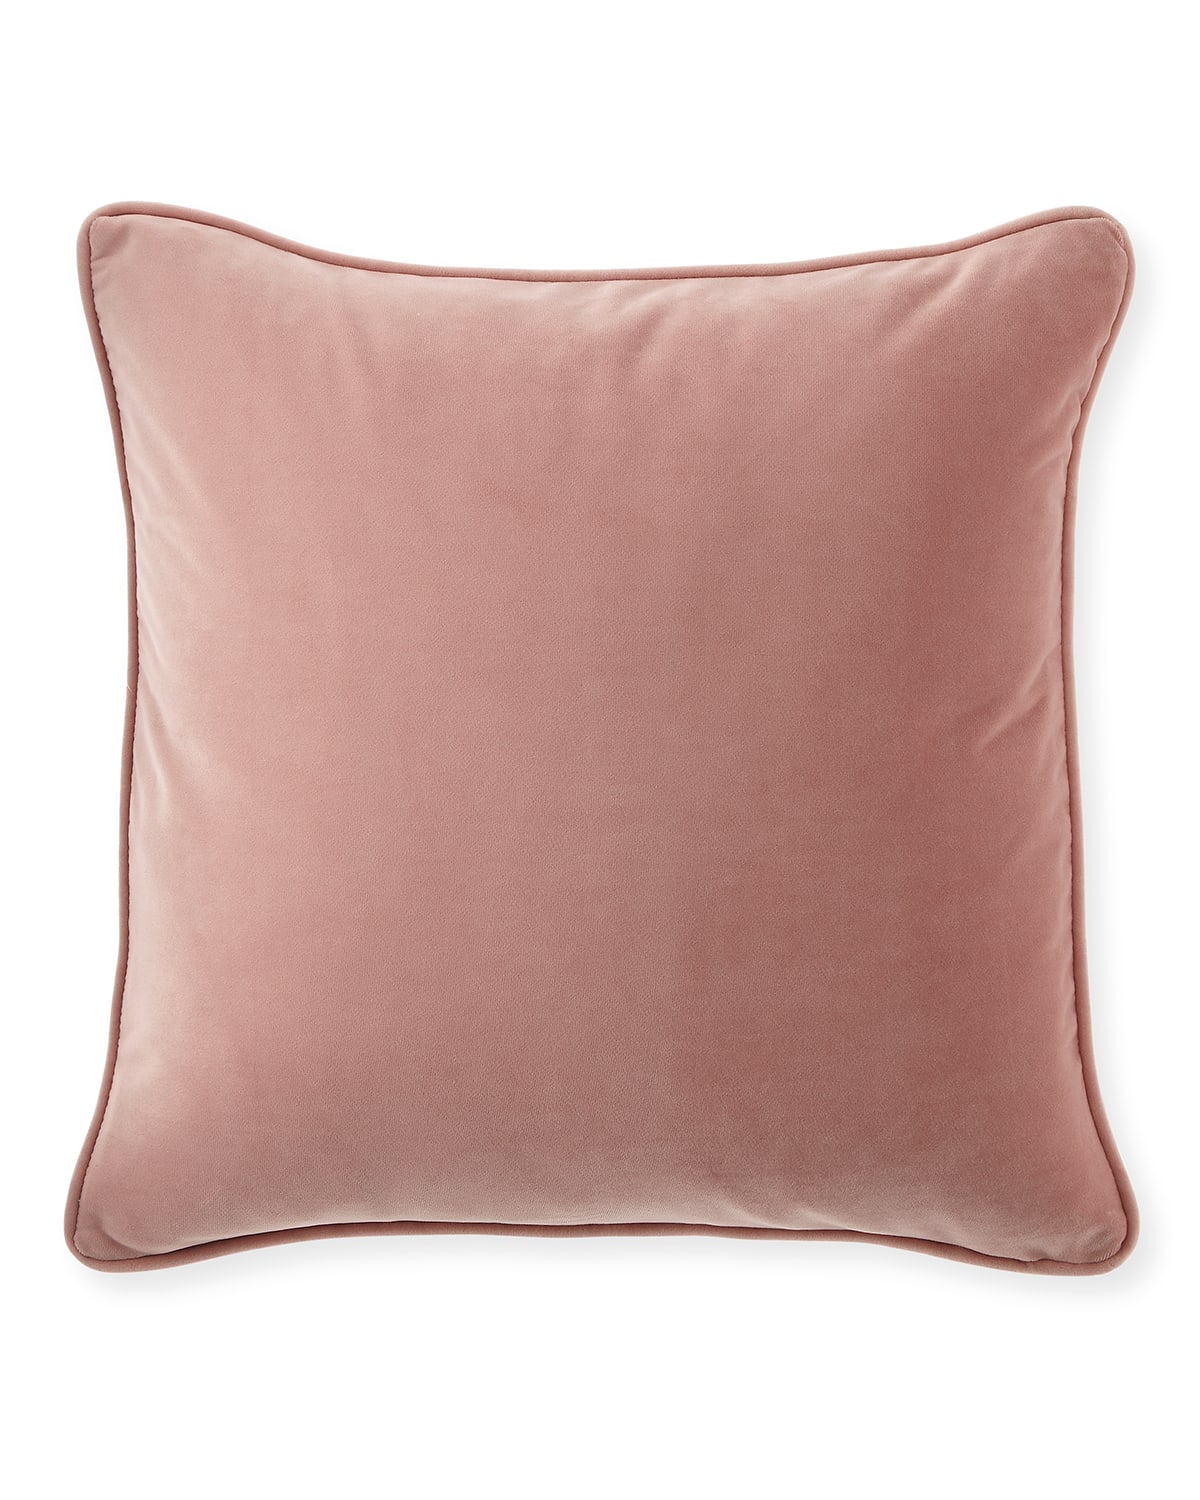 Shop Sherry Kline Home Blissful Reversible Pillow, 20"sq. In Blush